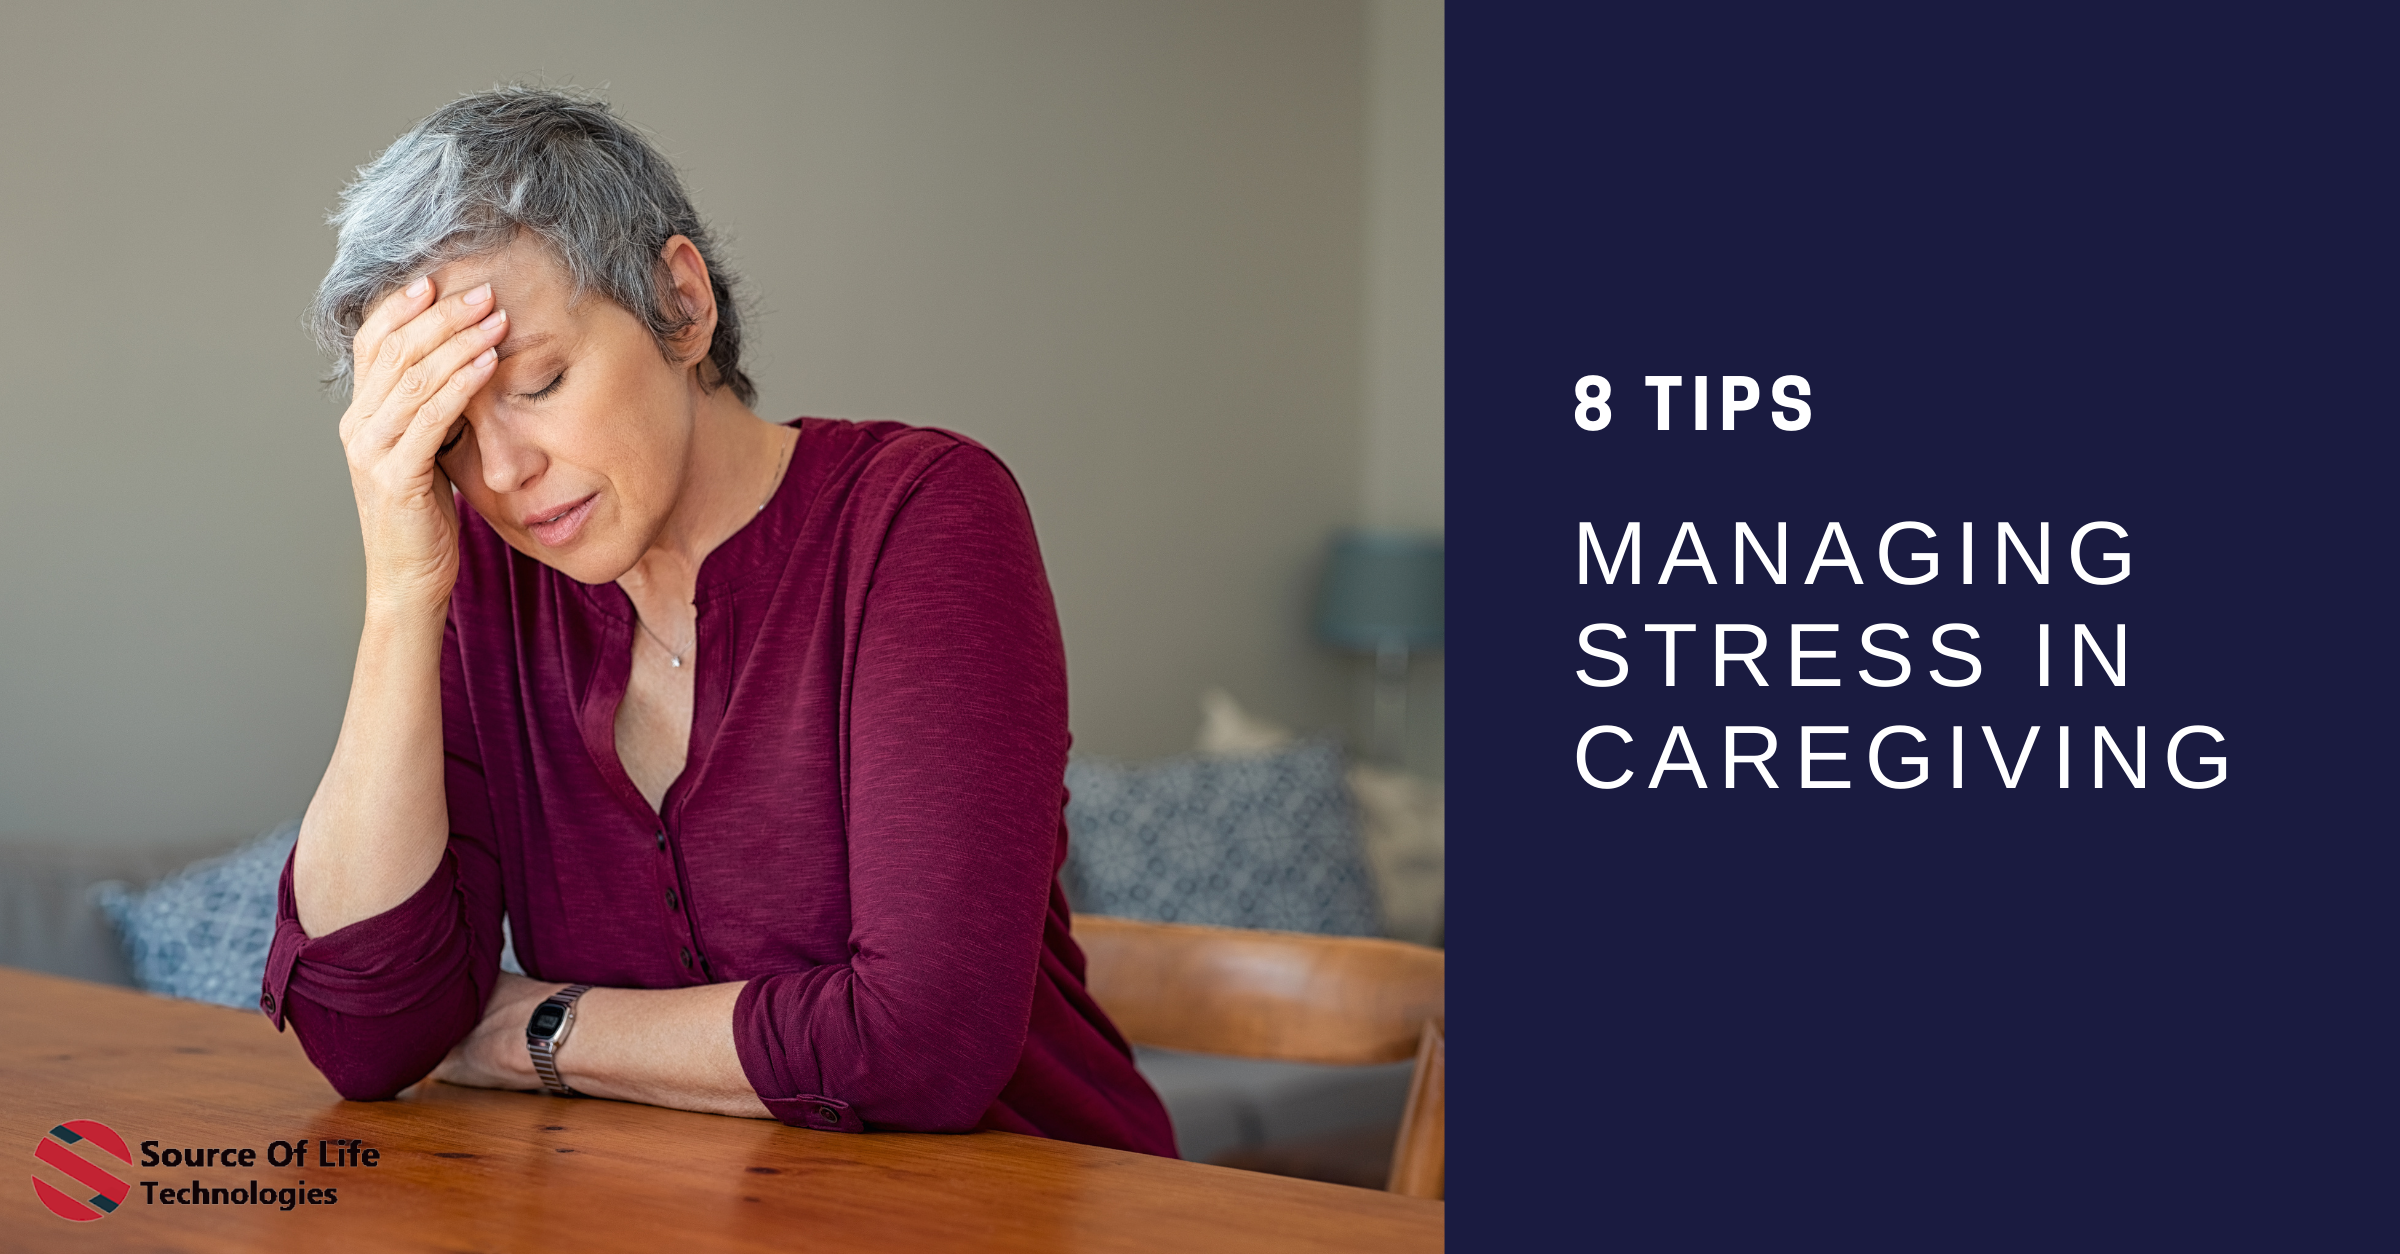 Managing Stress in Caregiving: 8 Tips